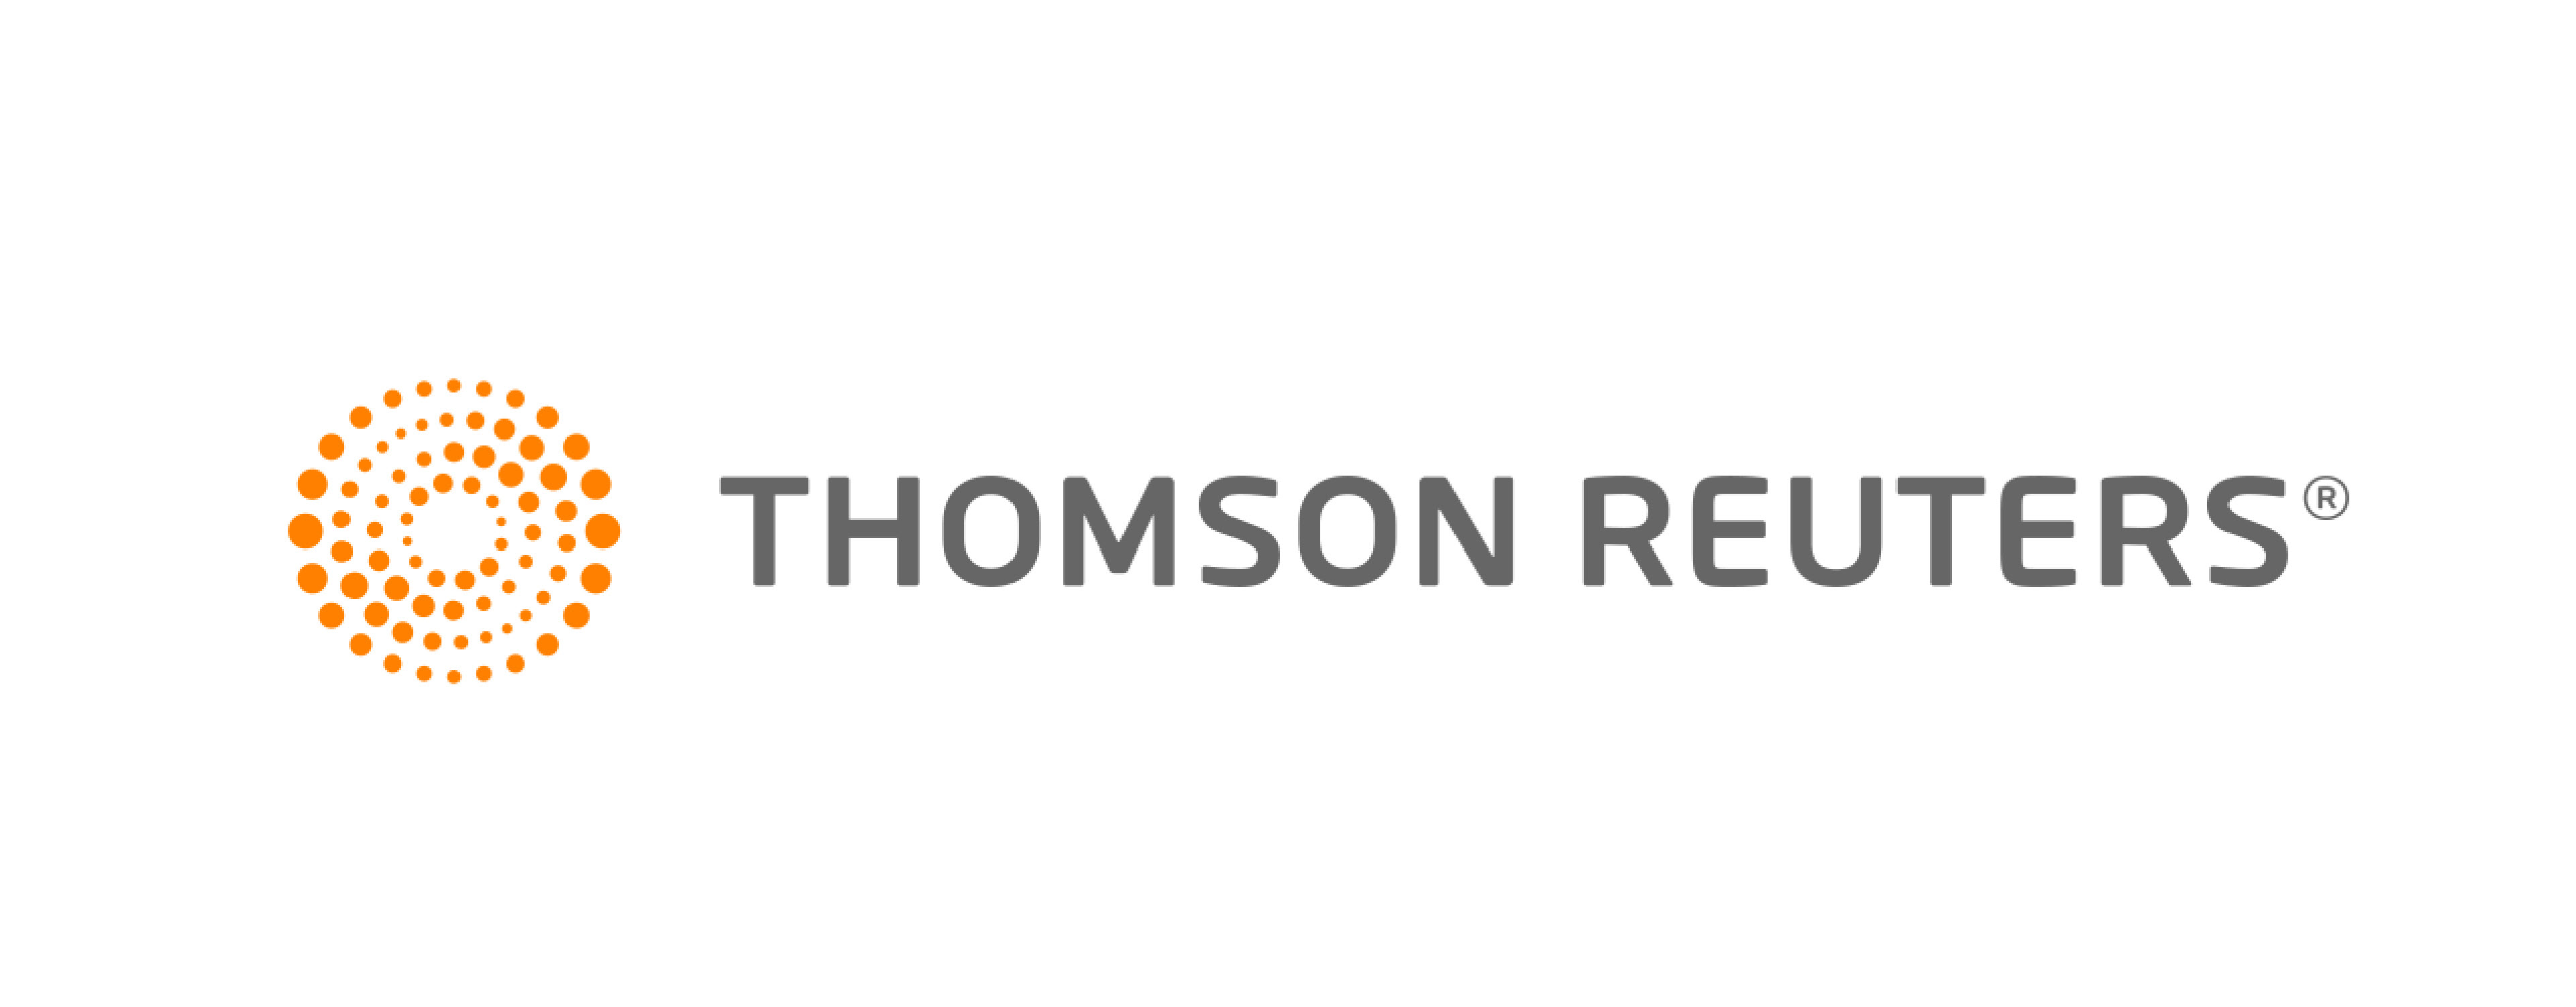 Logotipo de Thomson Reuters